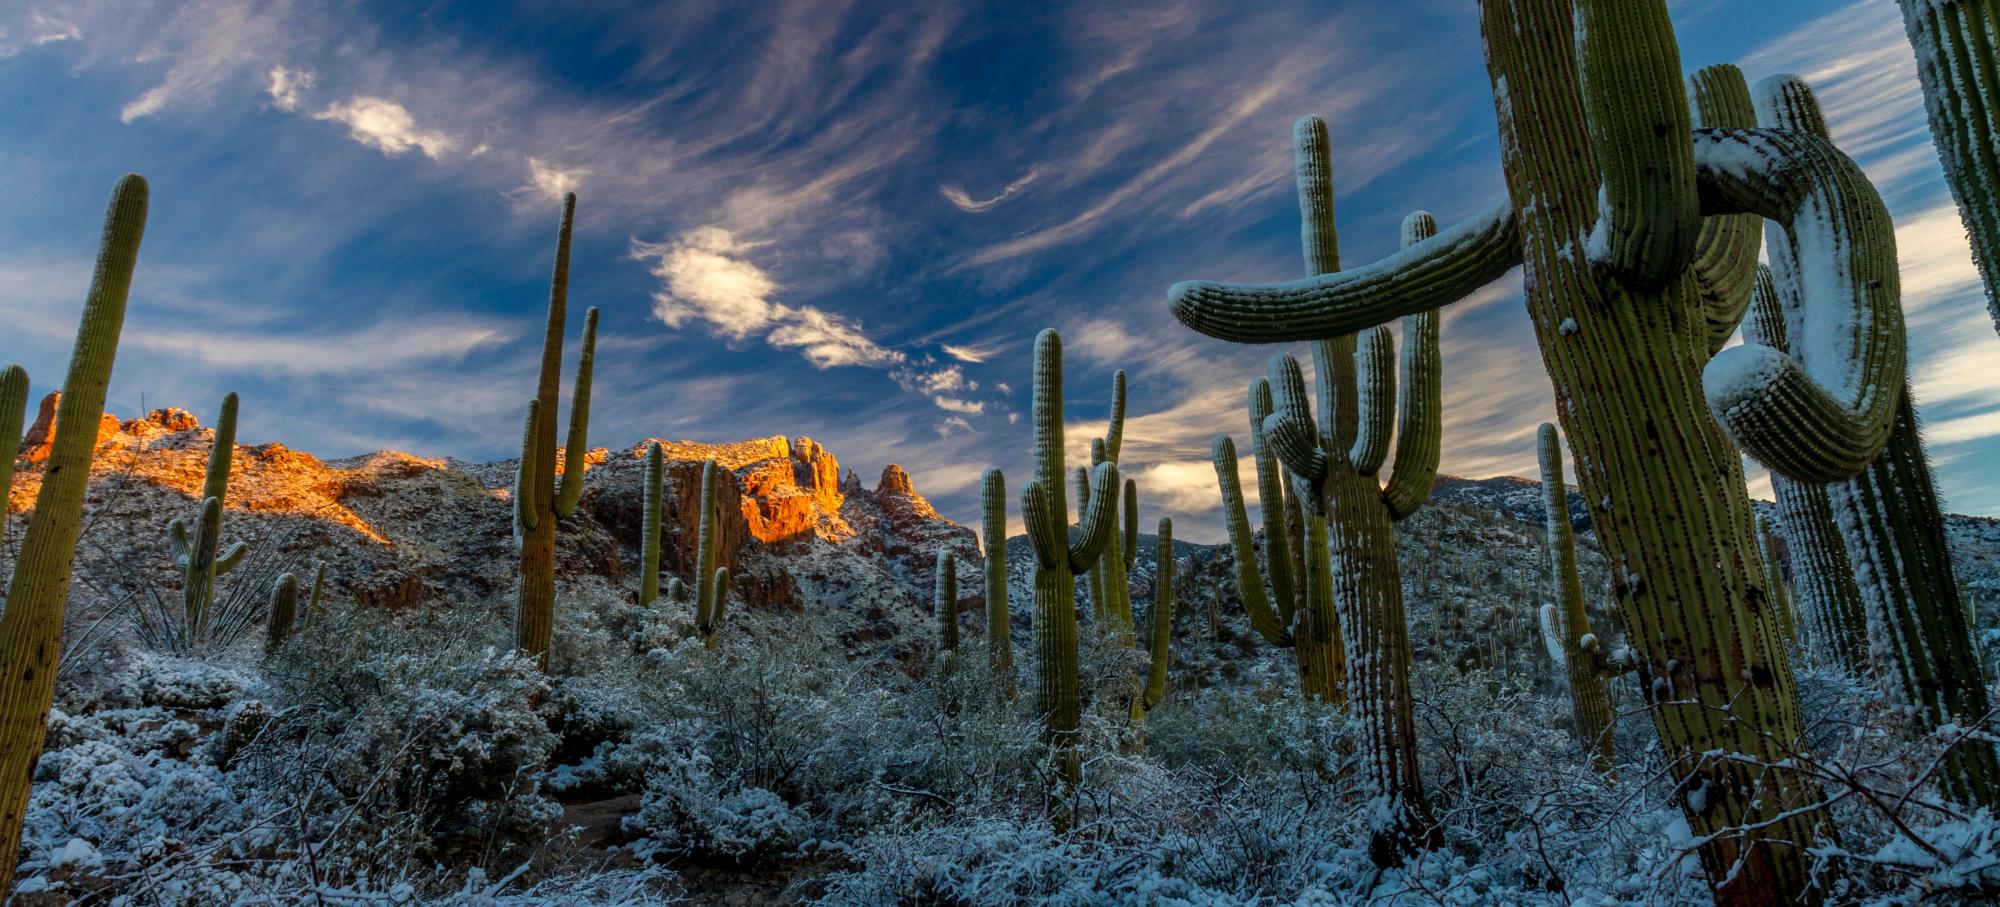 Snow on saguaro cactus in desert